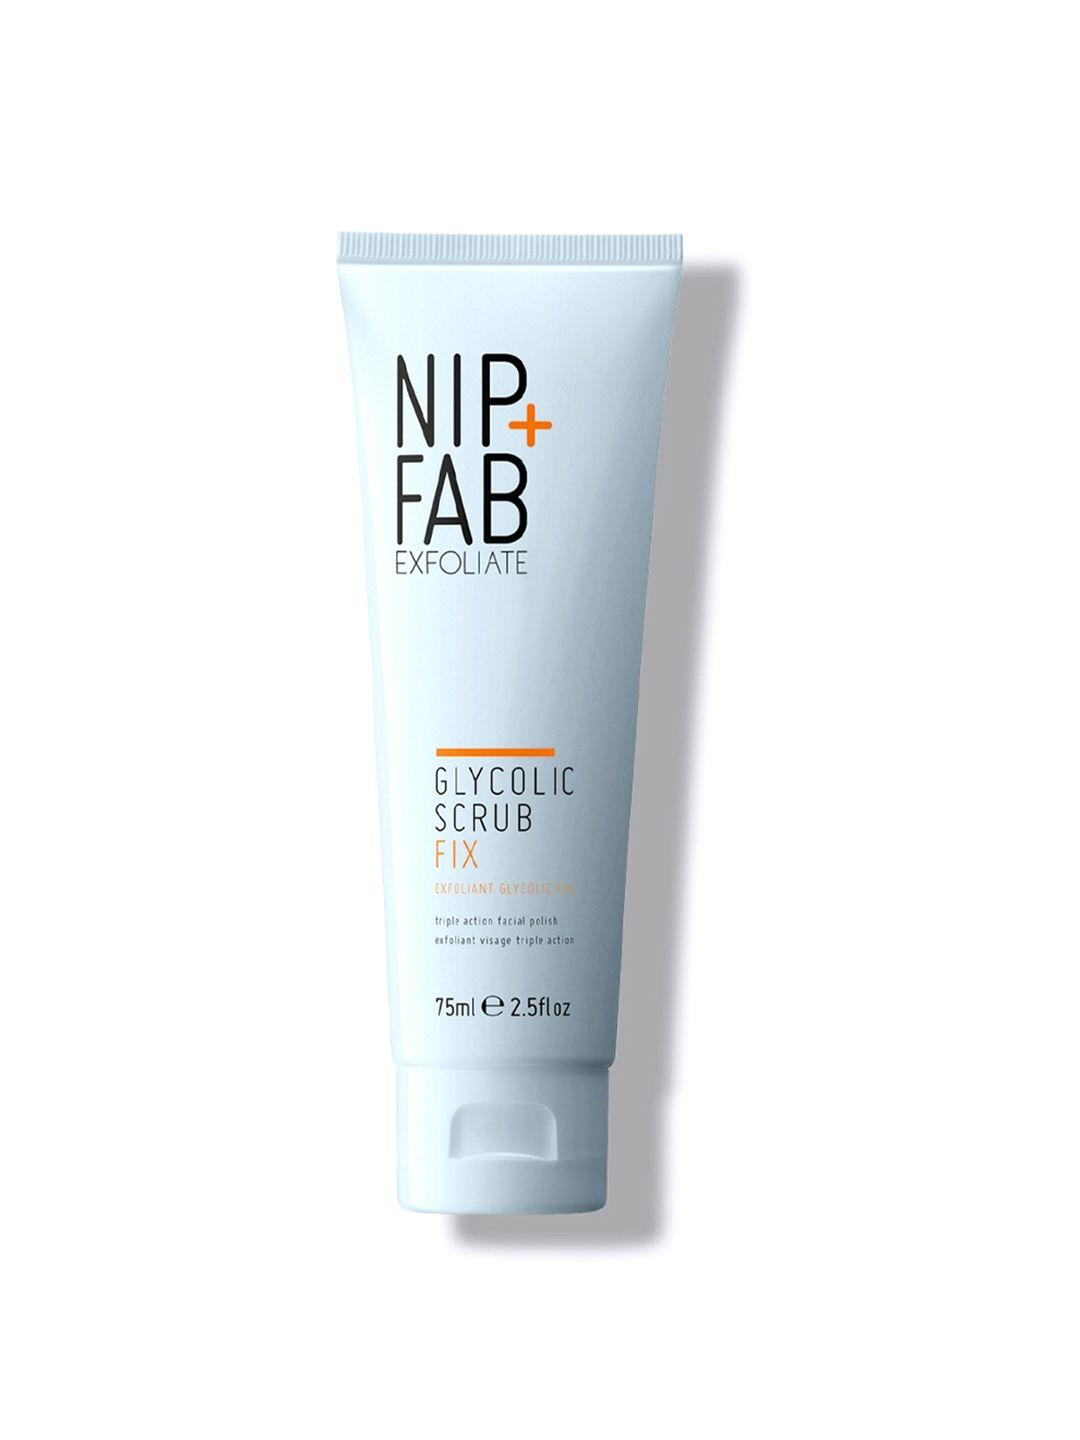 nip+fab exfoliate glycolic fix facial scrub - 75 ml